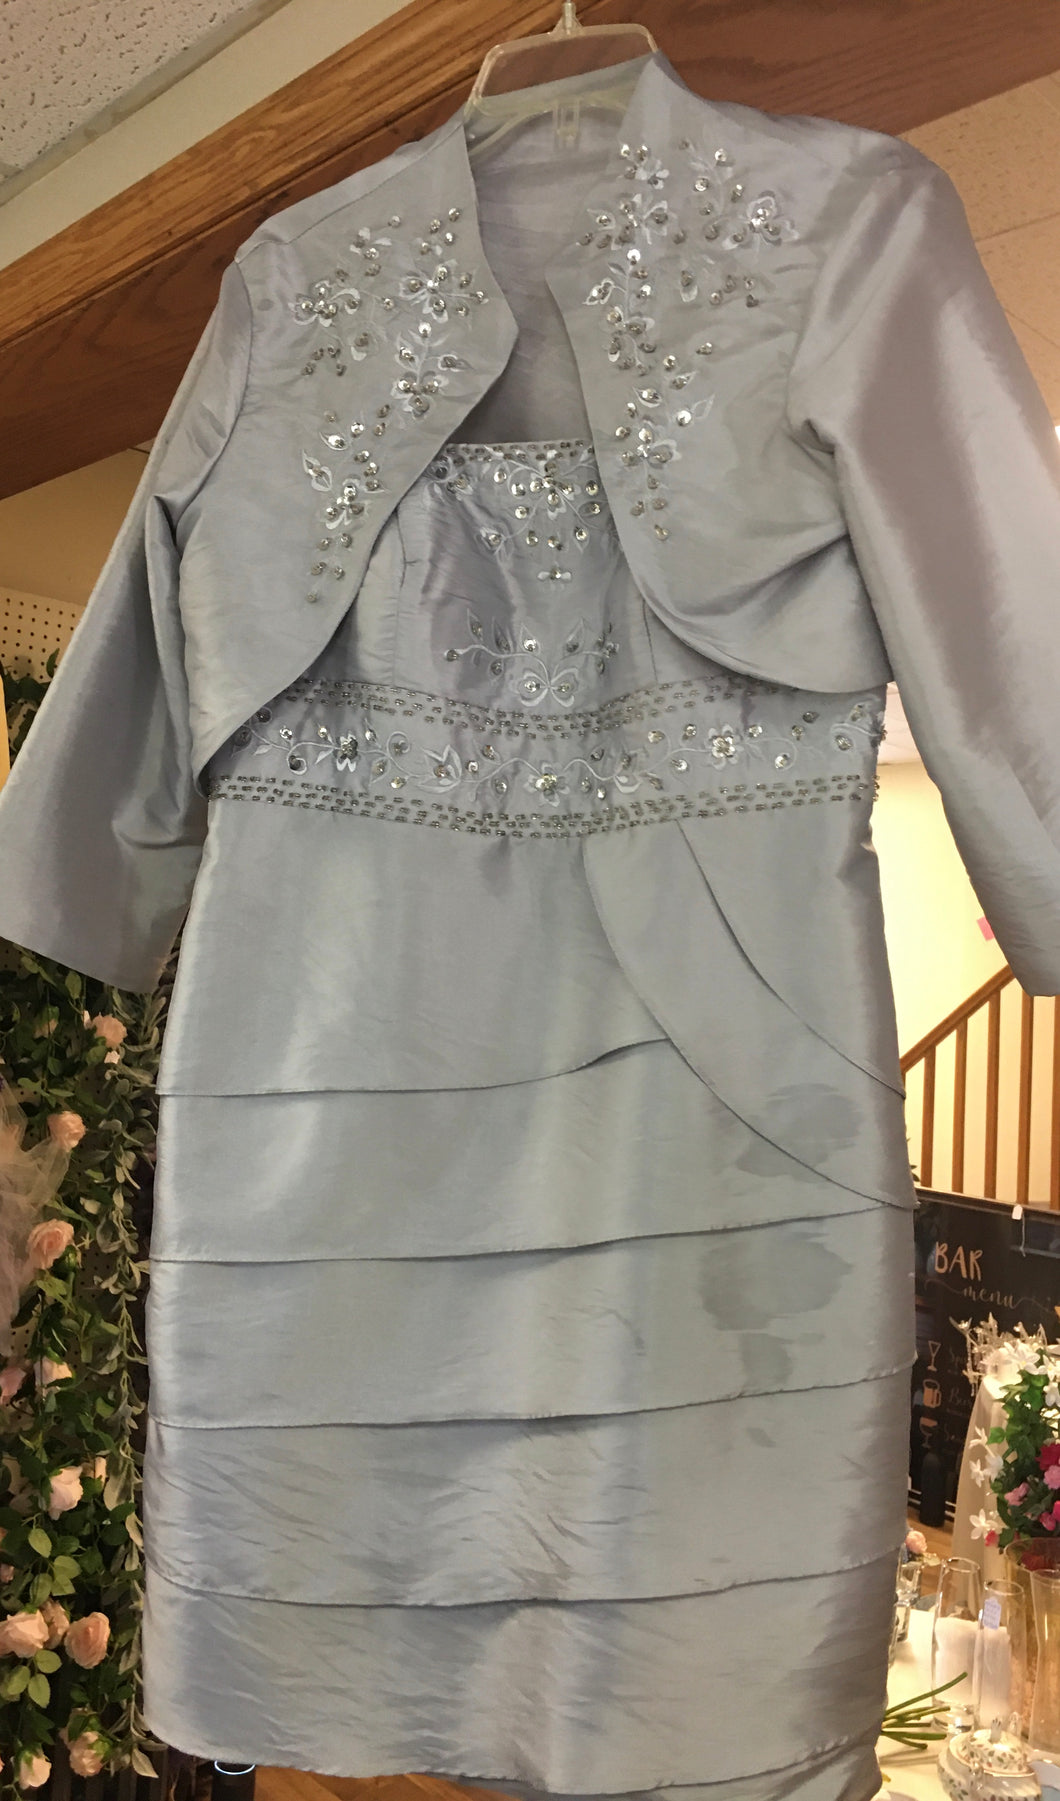 HANC100-B. JJ’s House Silver Dress with Jacket